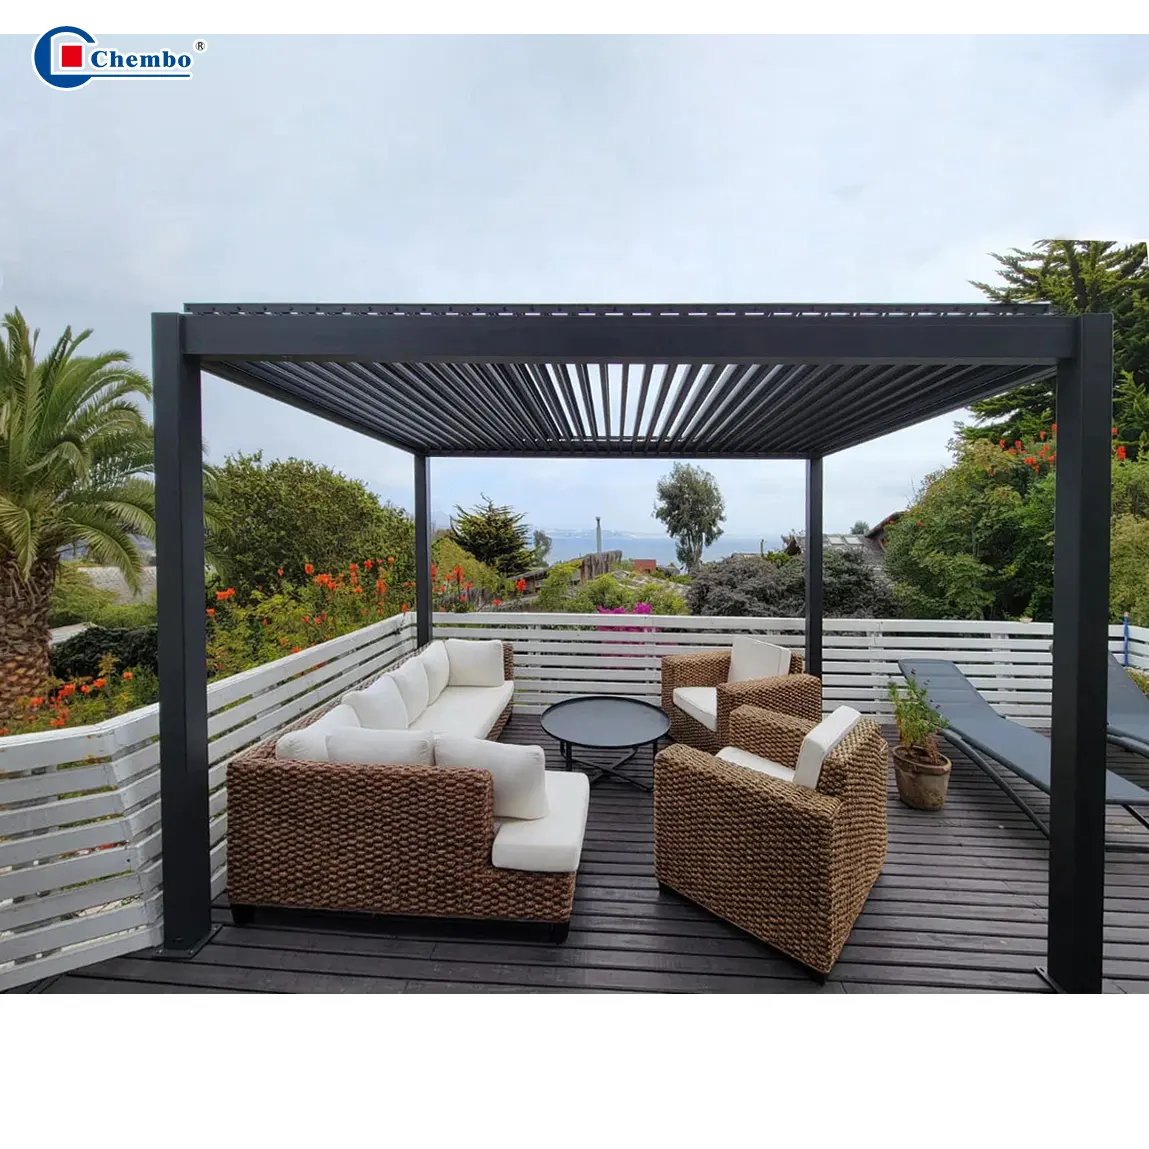 Pérgolas de aluminio impermeables para exteriores personalizadas, parasol de jardín, pérgolas impermeables con techo de aluminio